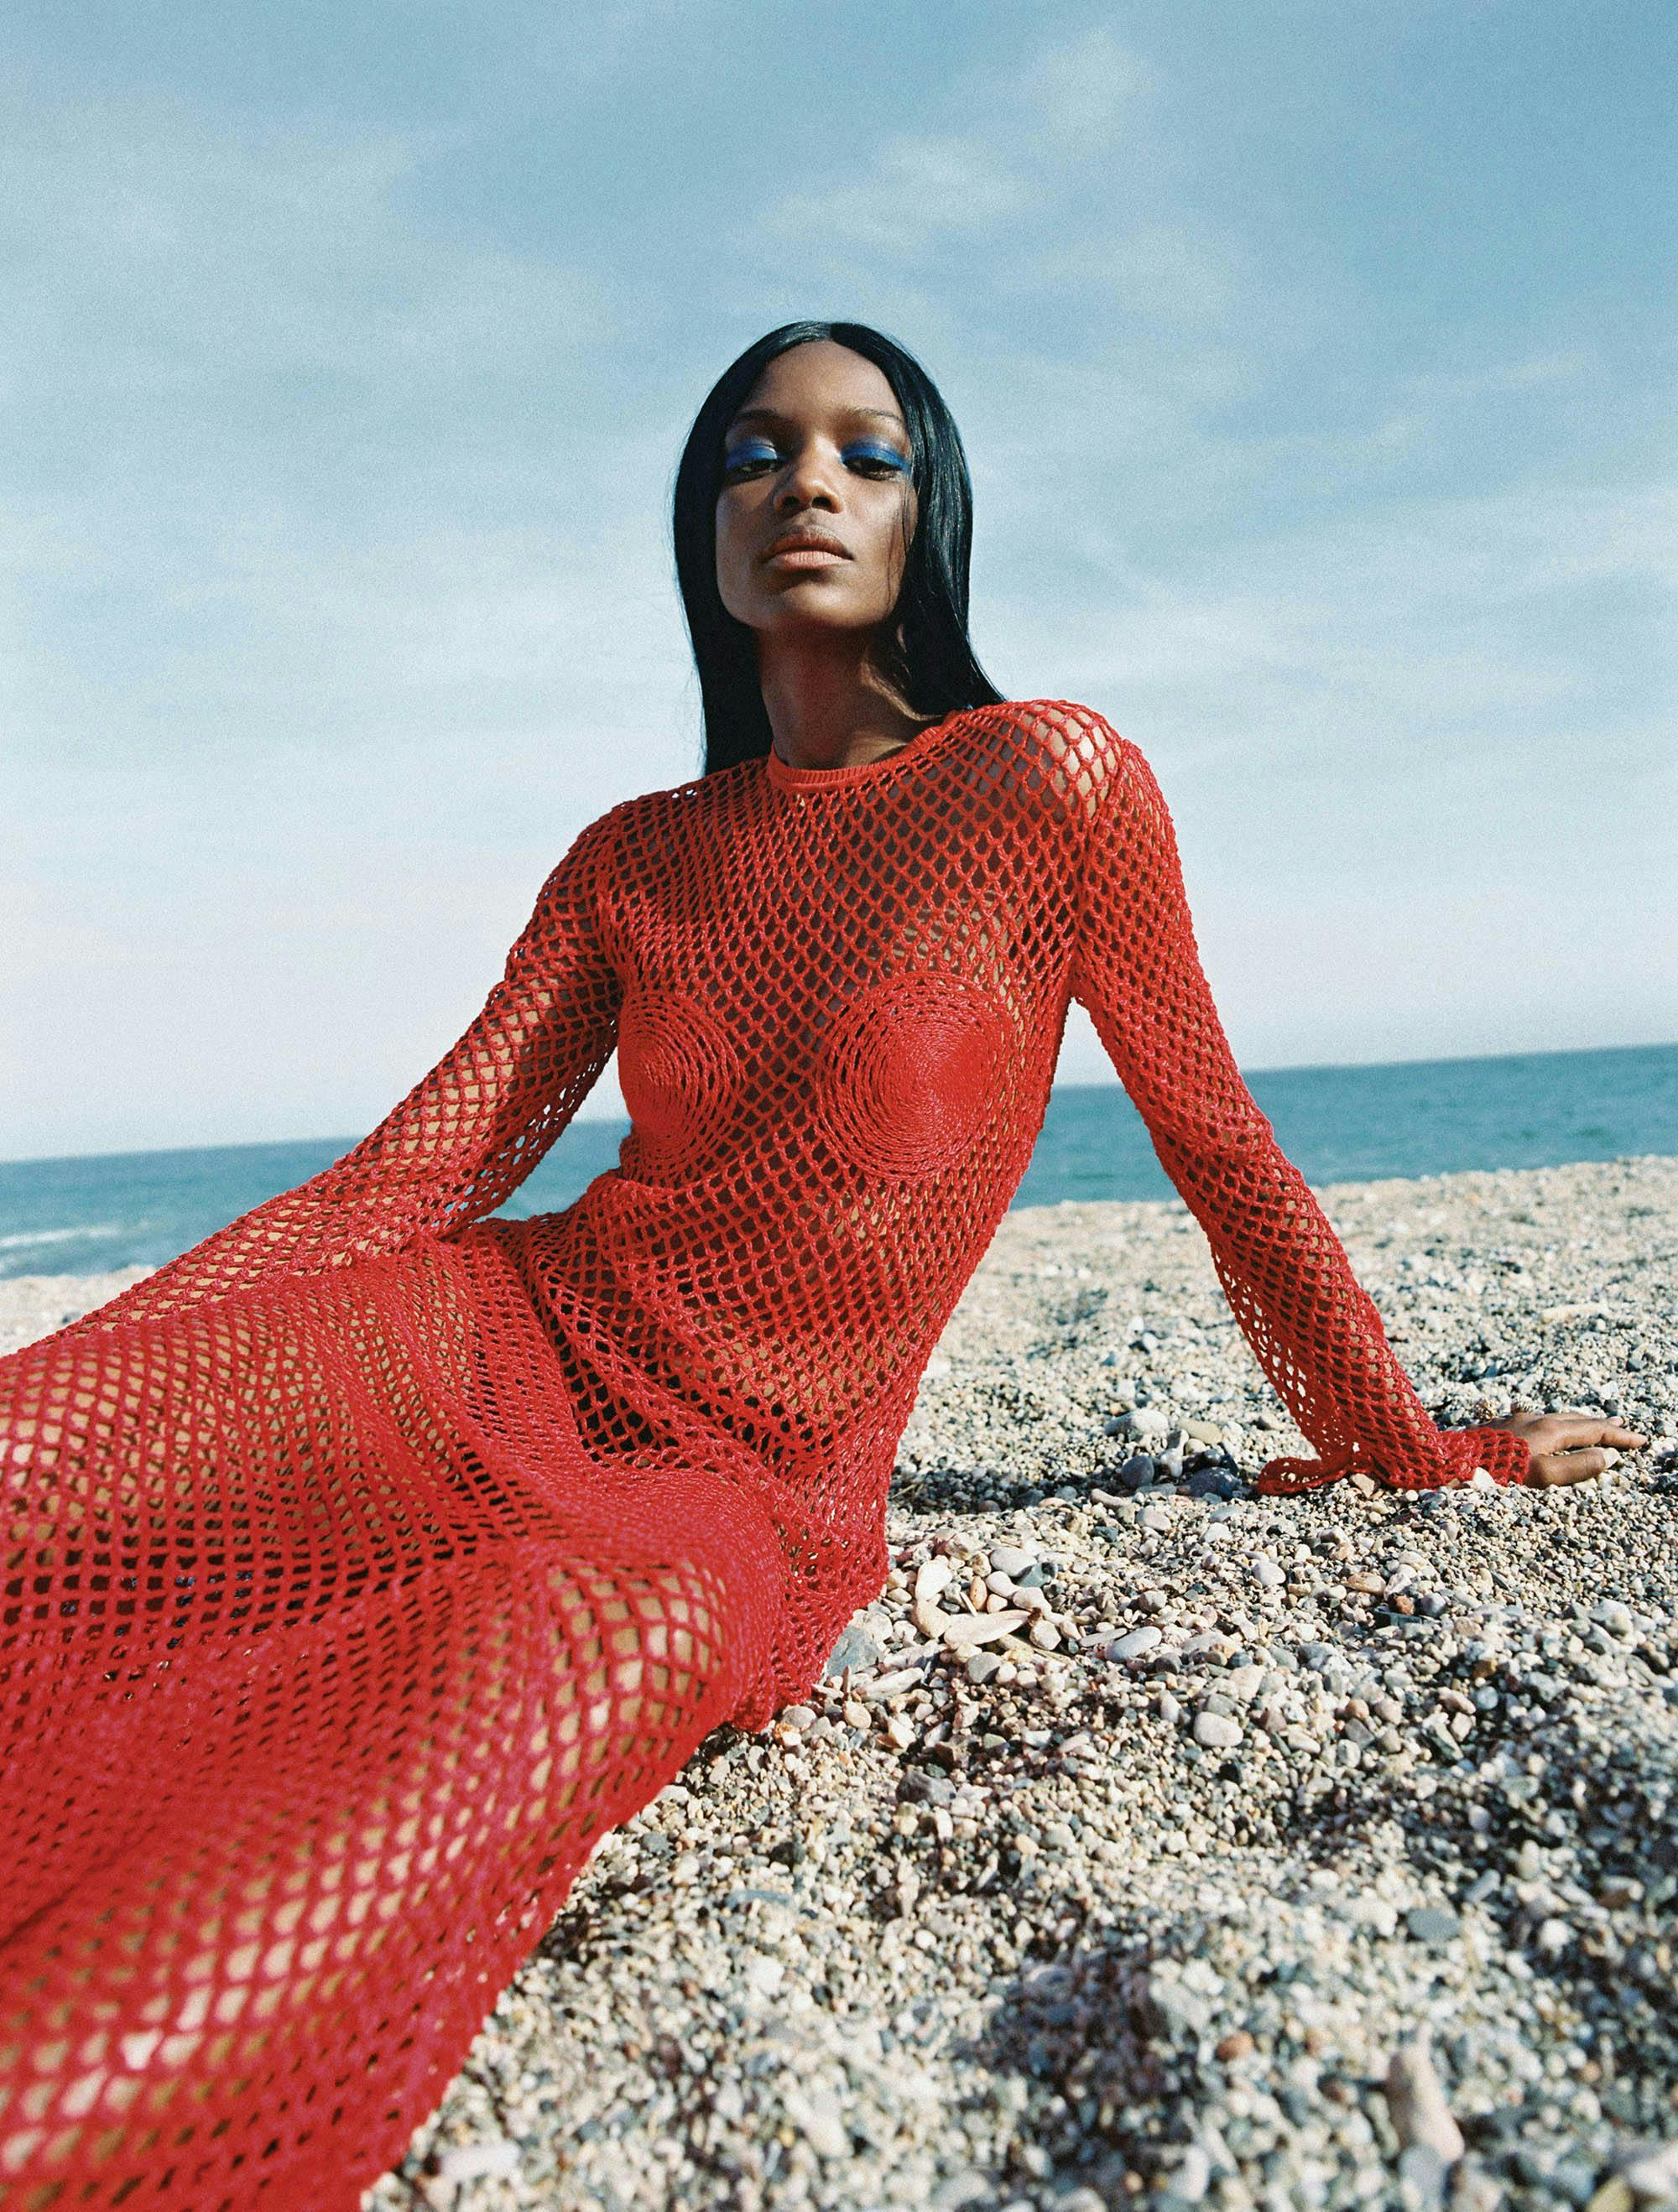 Model in red net dress on the beach.